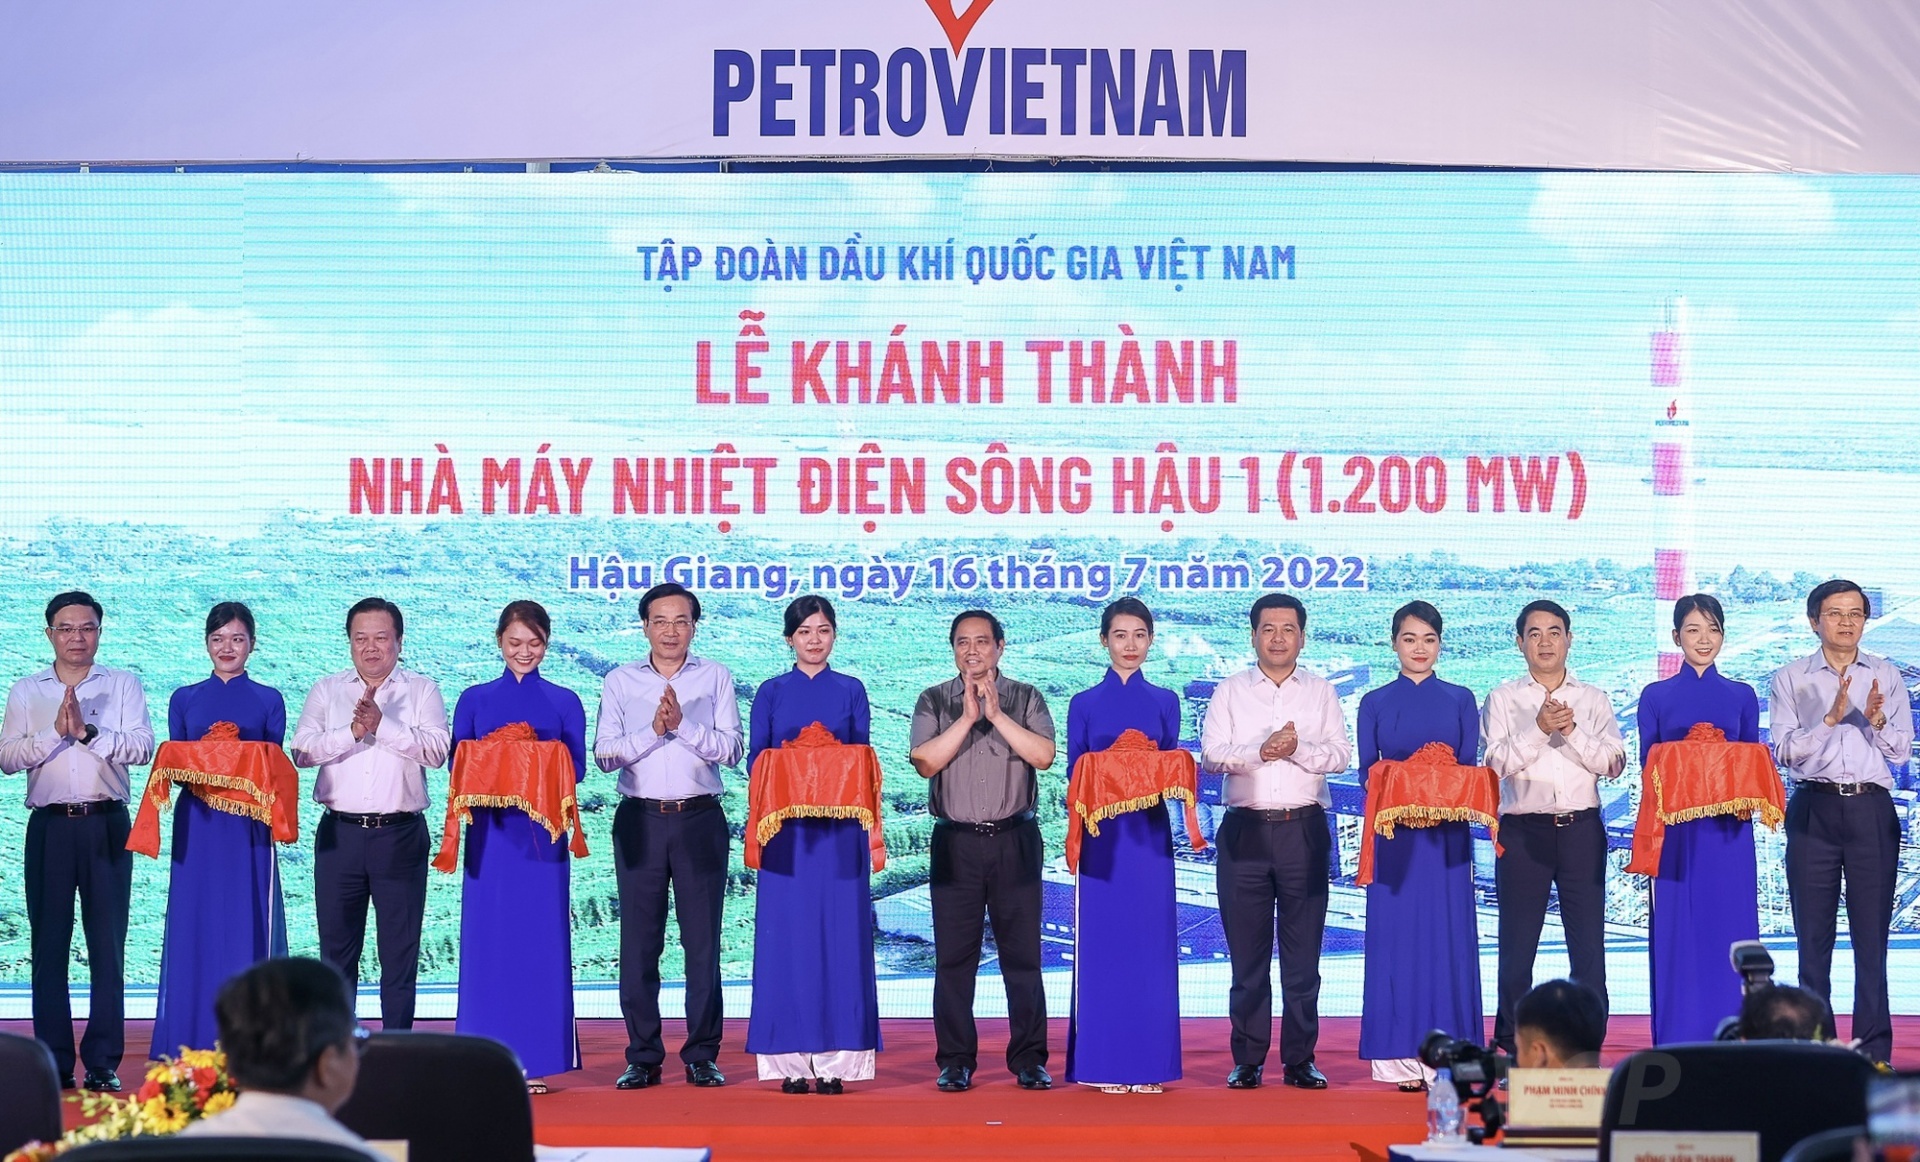 2 billion song hau 1 thermal power plant inaugurated